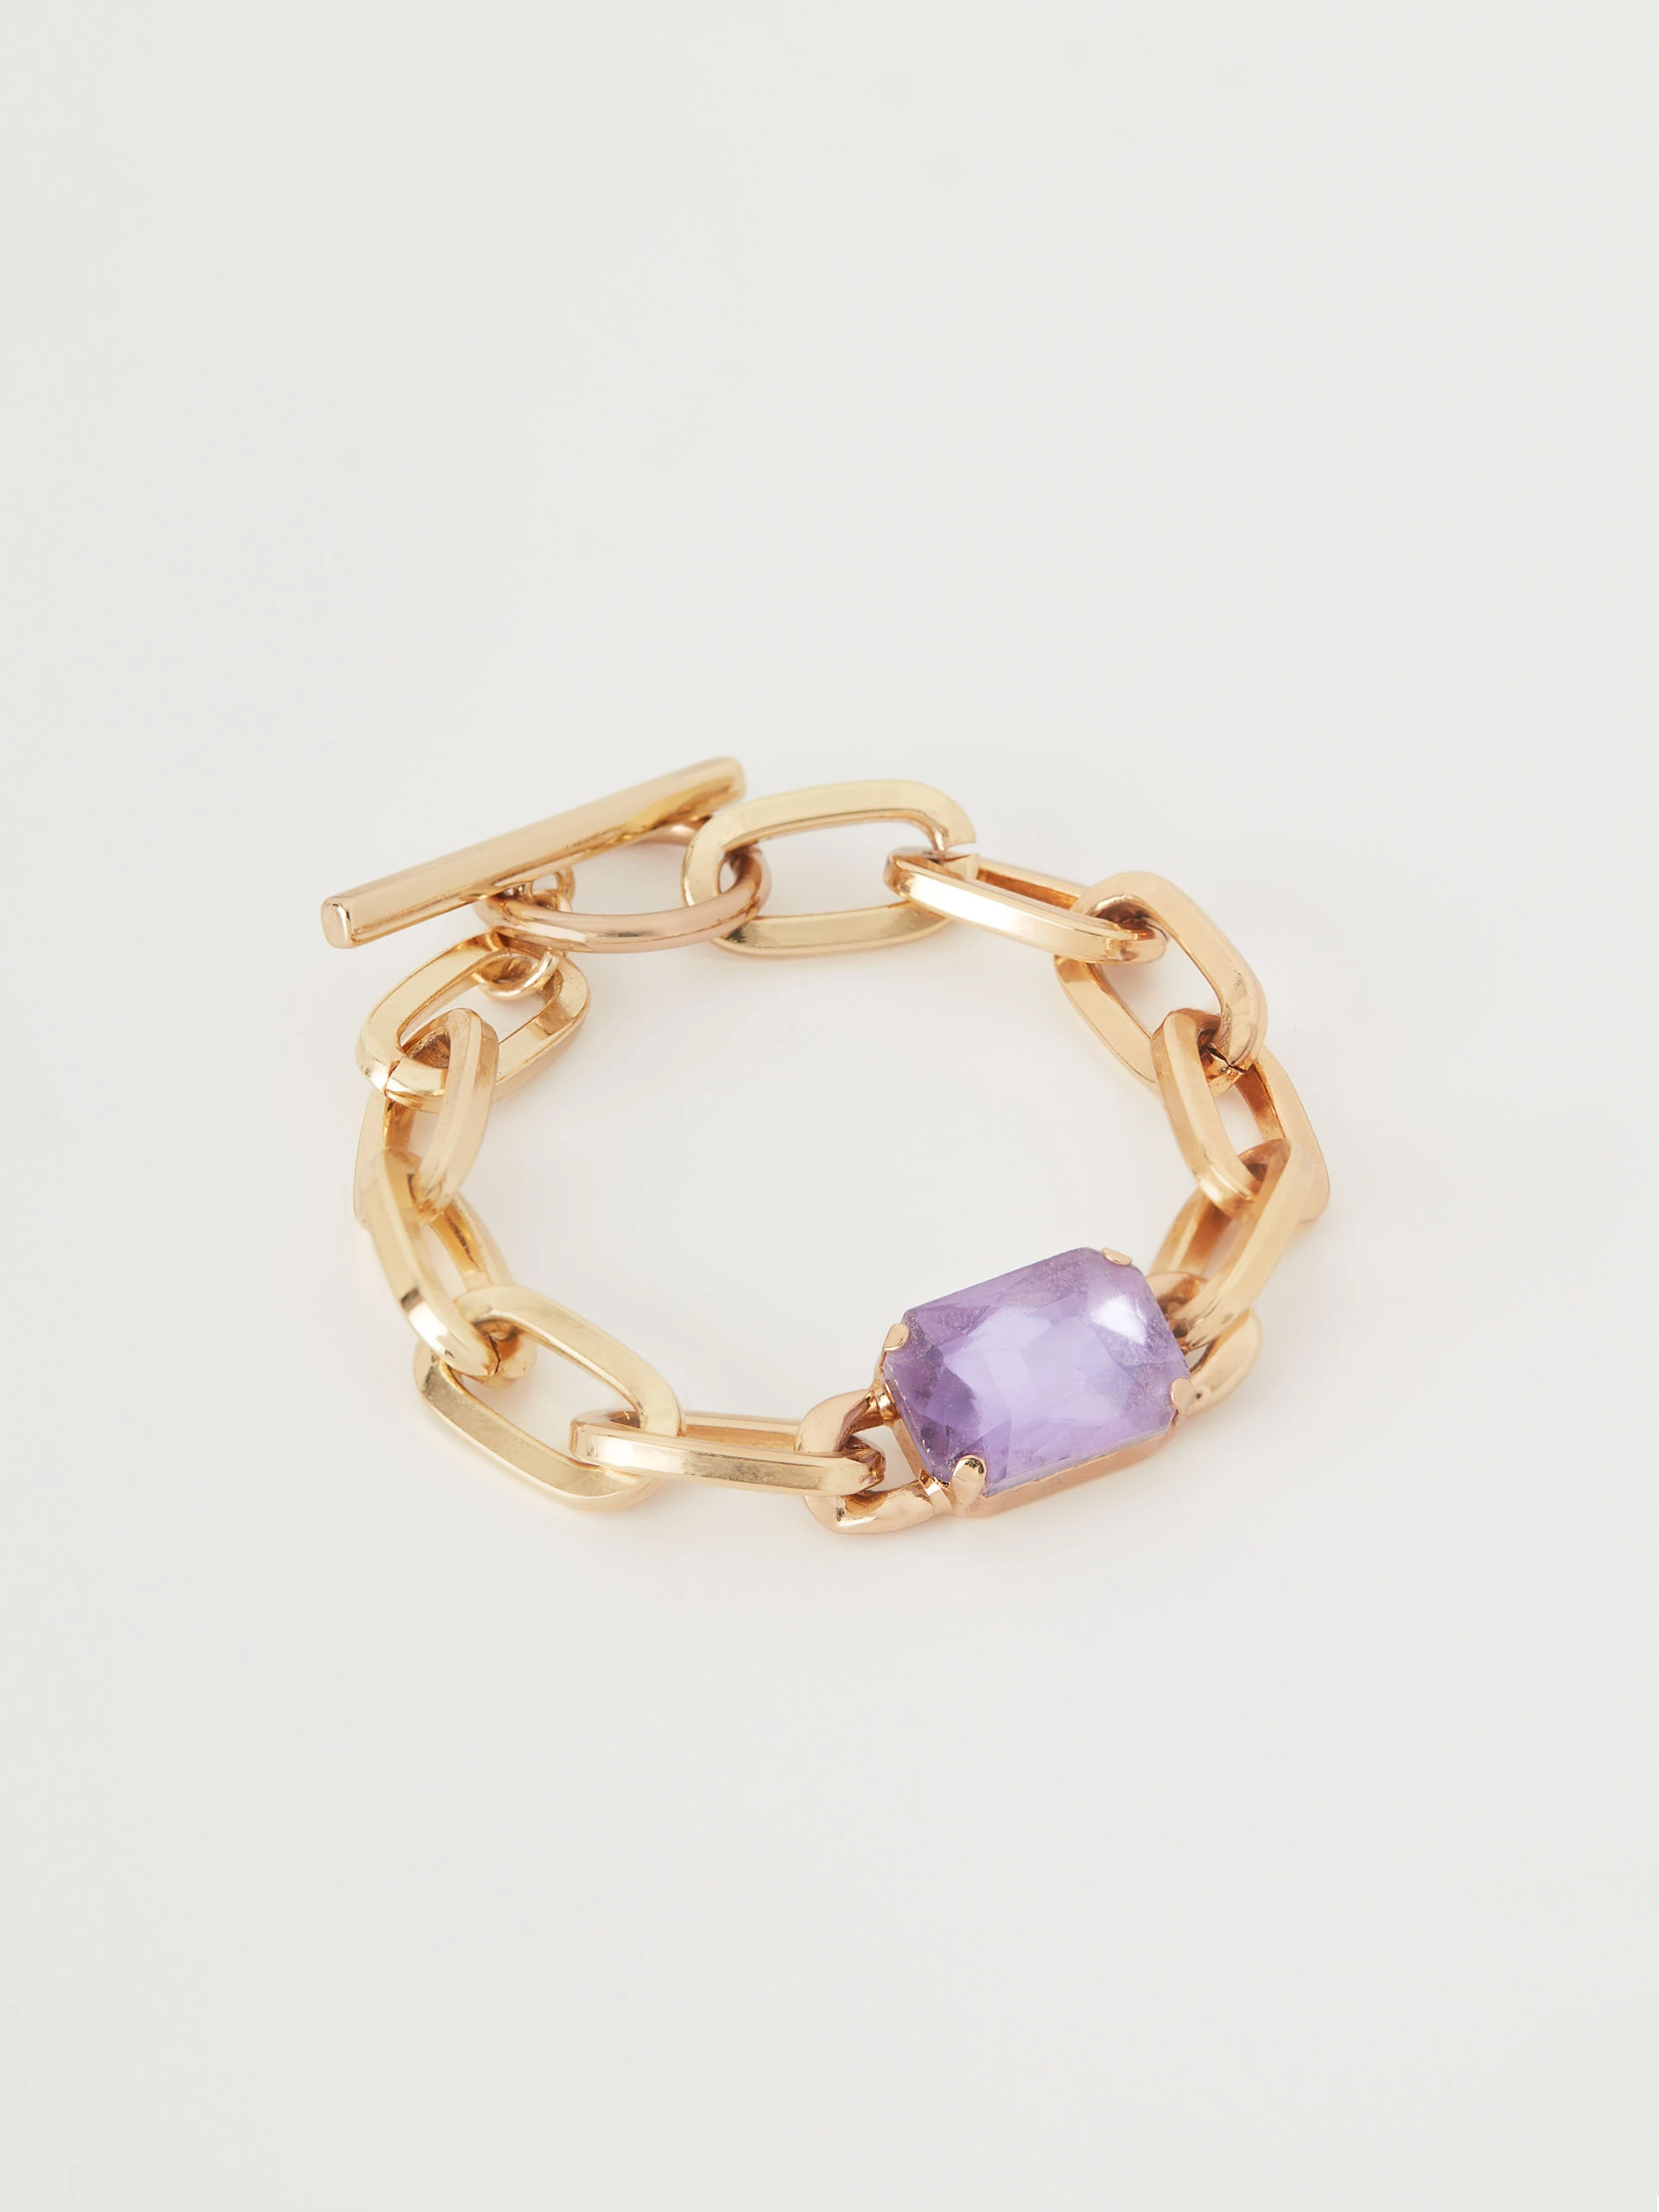 Bracelet with purple stone